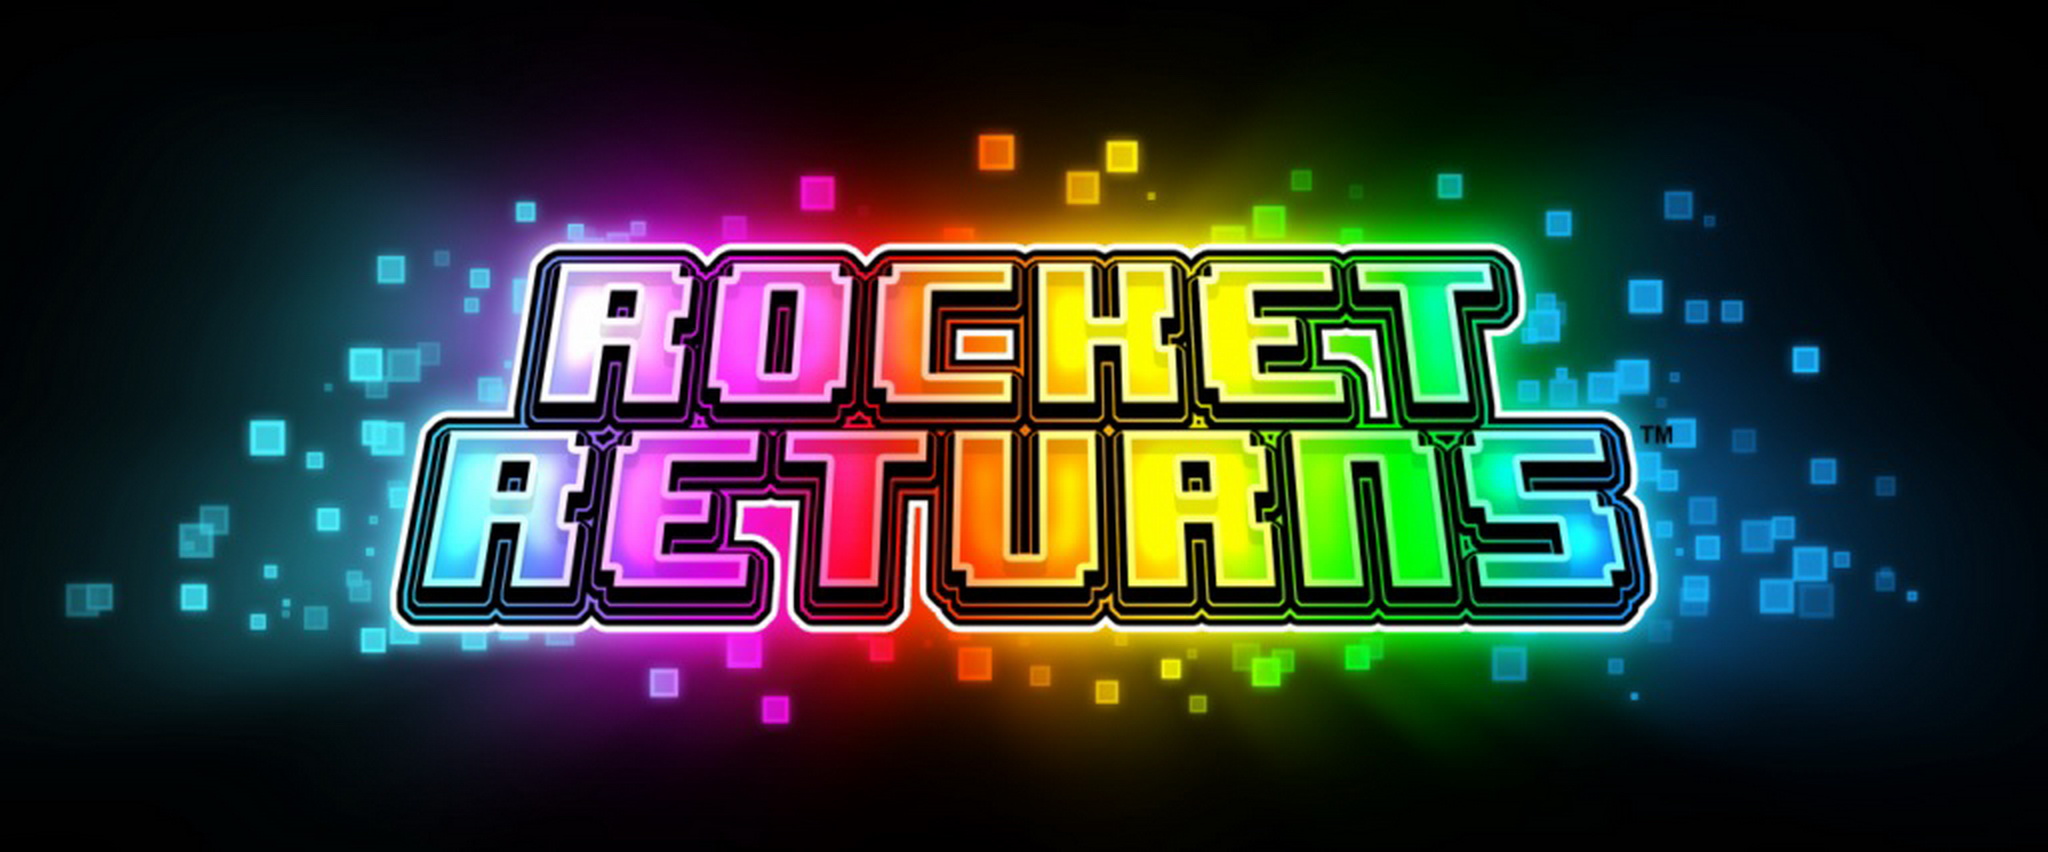 Rocket Returns demo